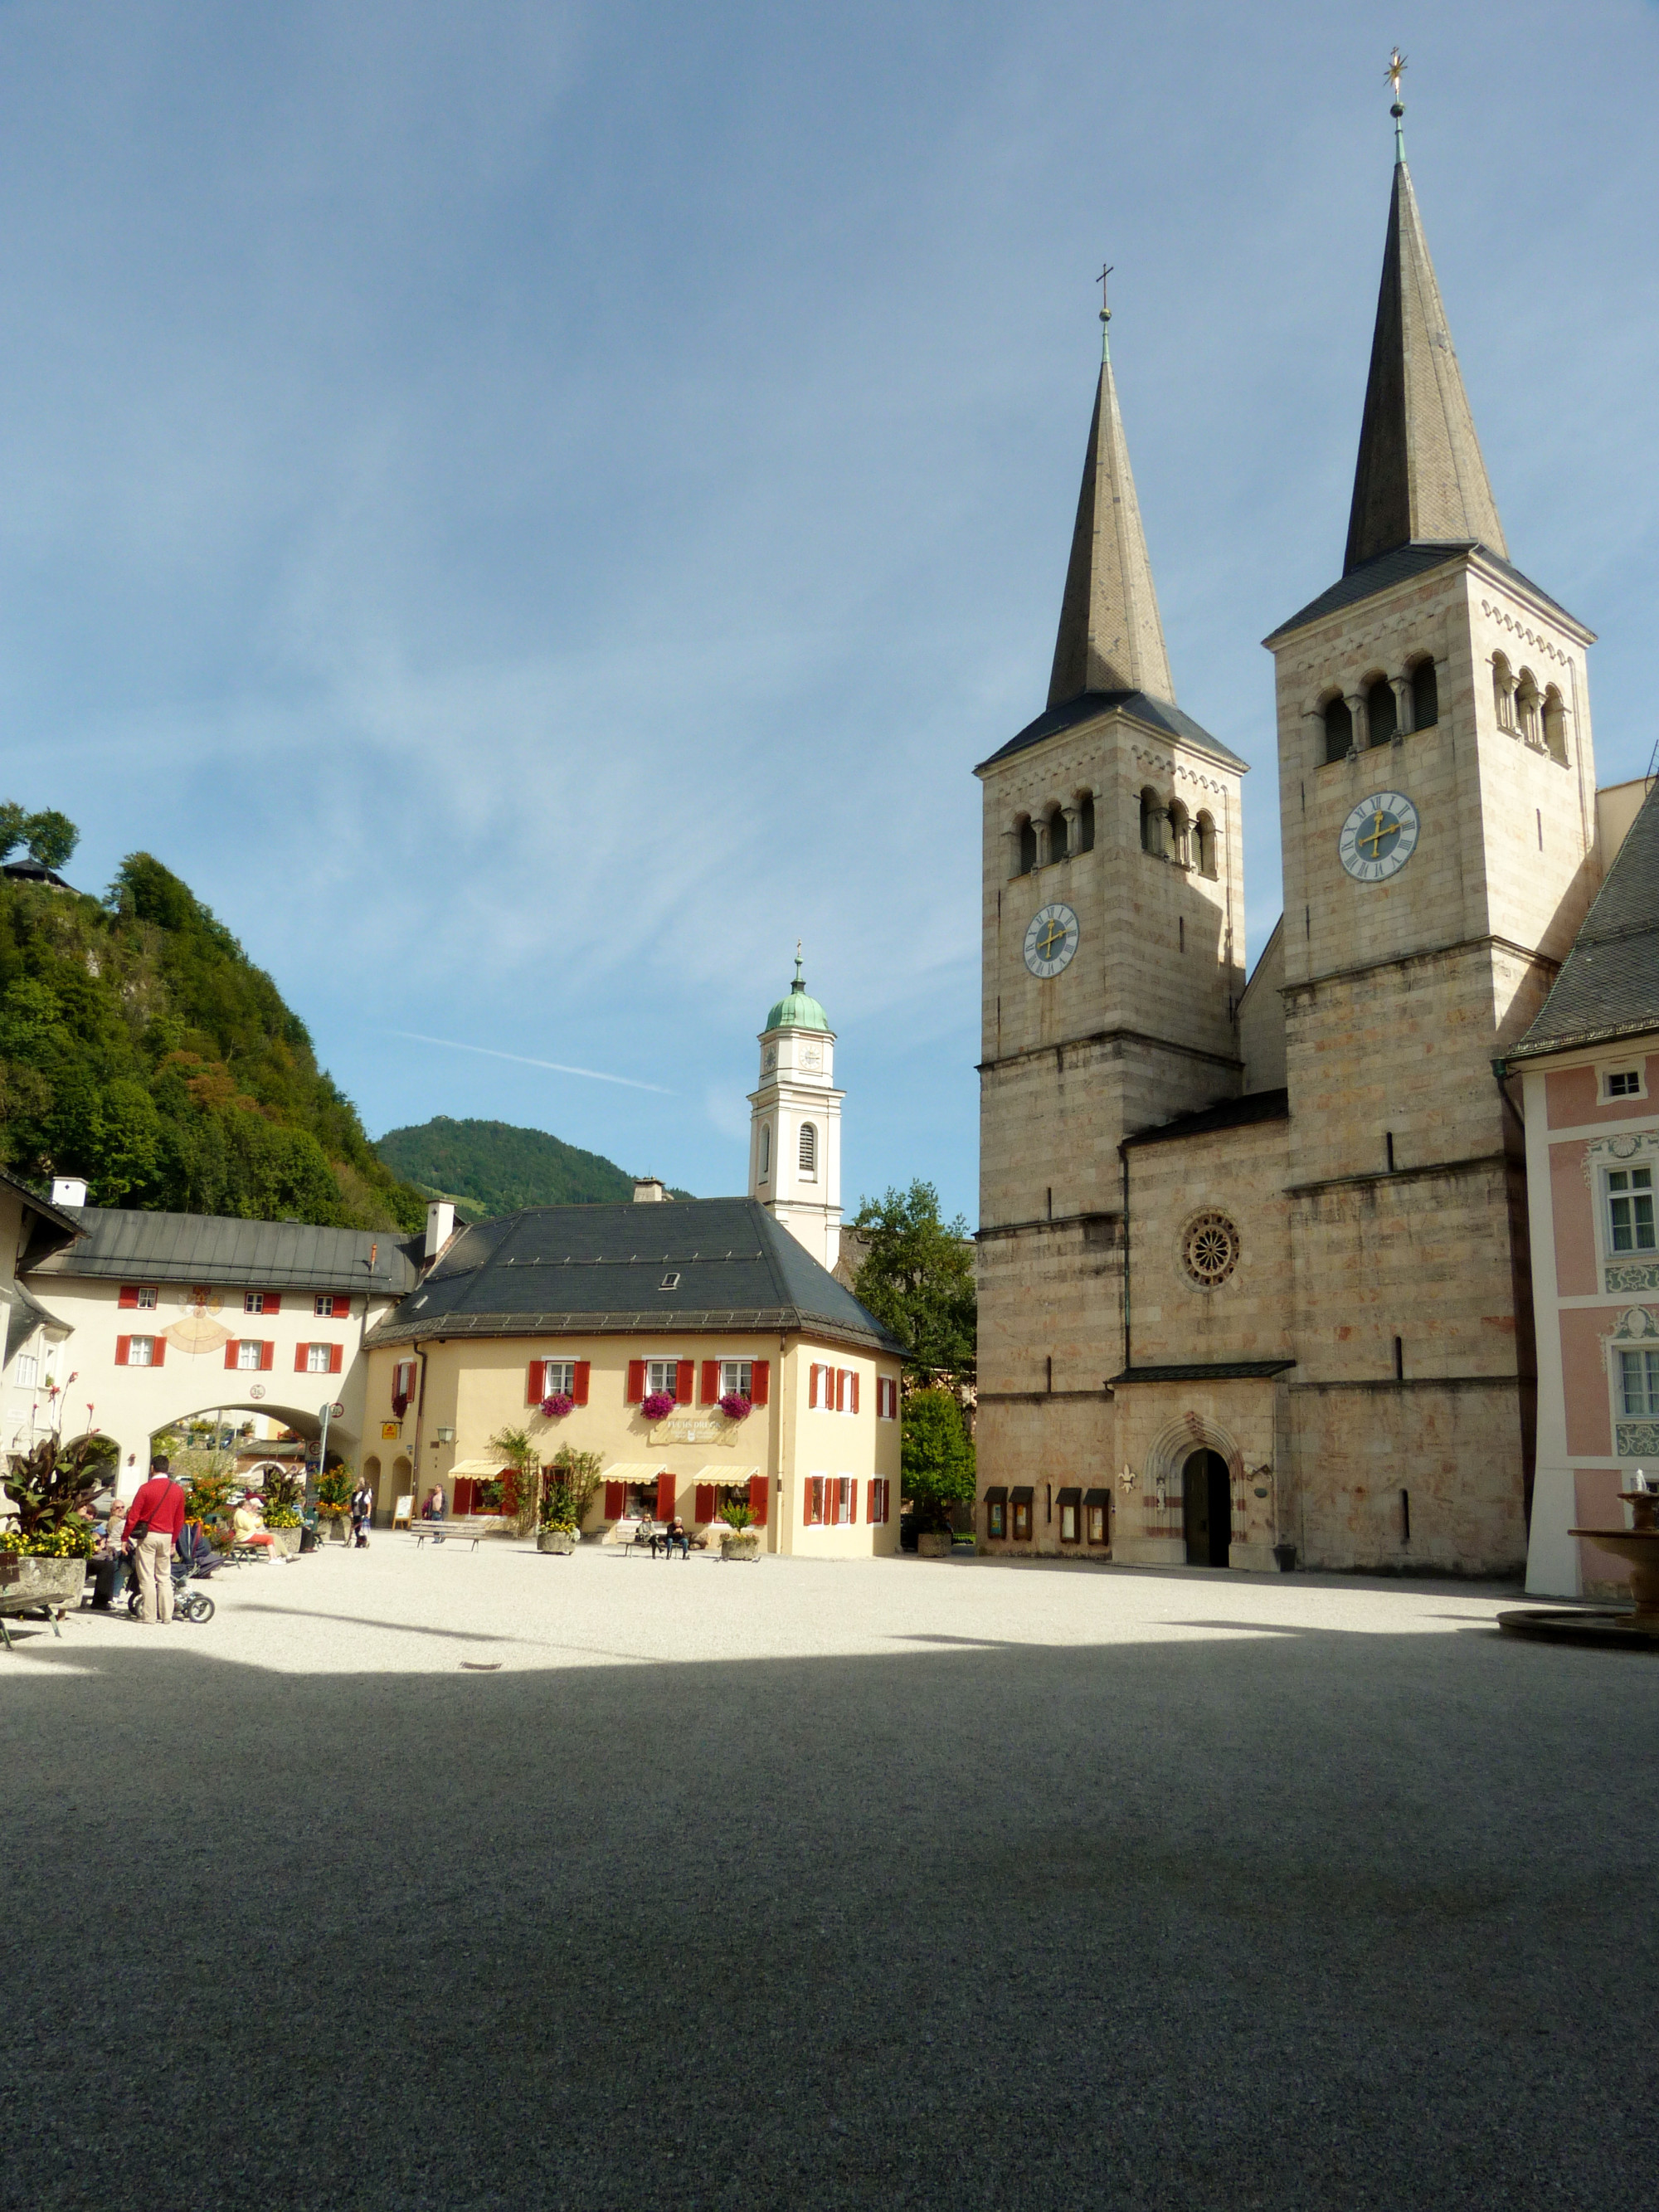 Schlossplatz with Collegiate Church of St. Peter and John 